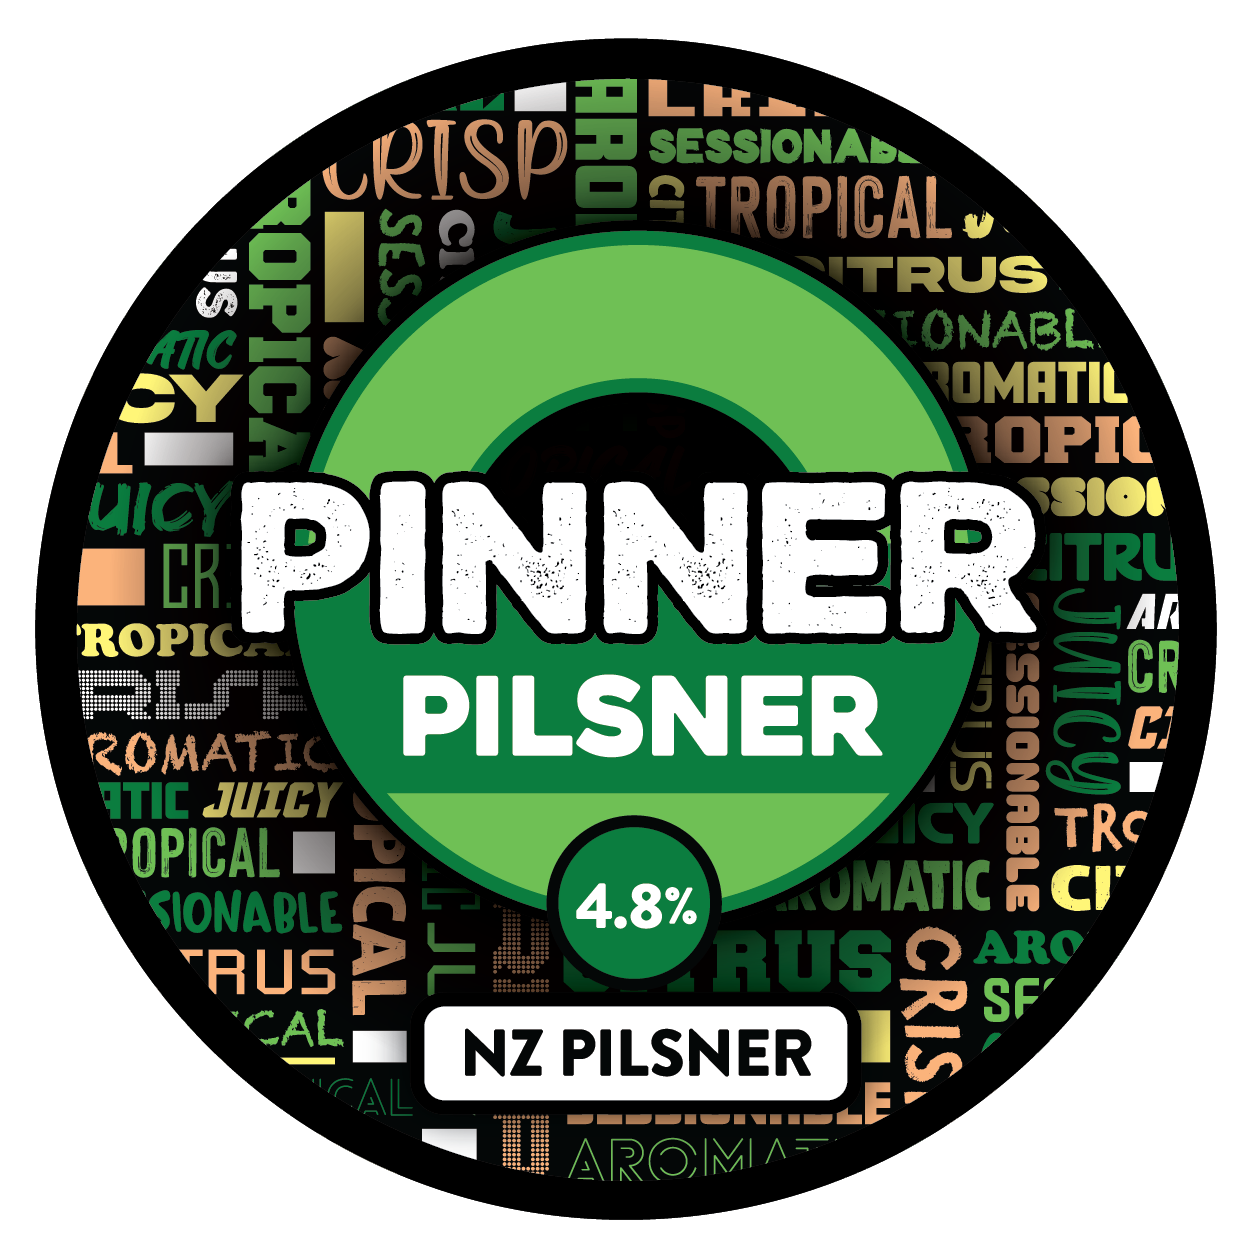 The tap badge for Sprig and Fern's Pinner NZ Pilsner craft beer